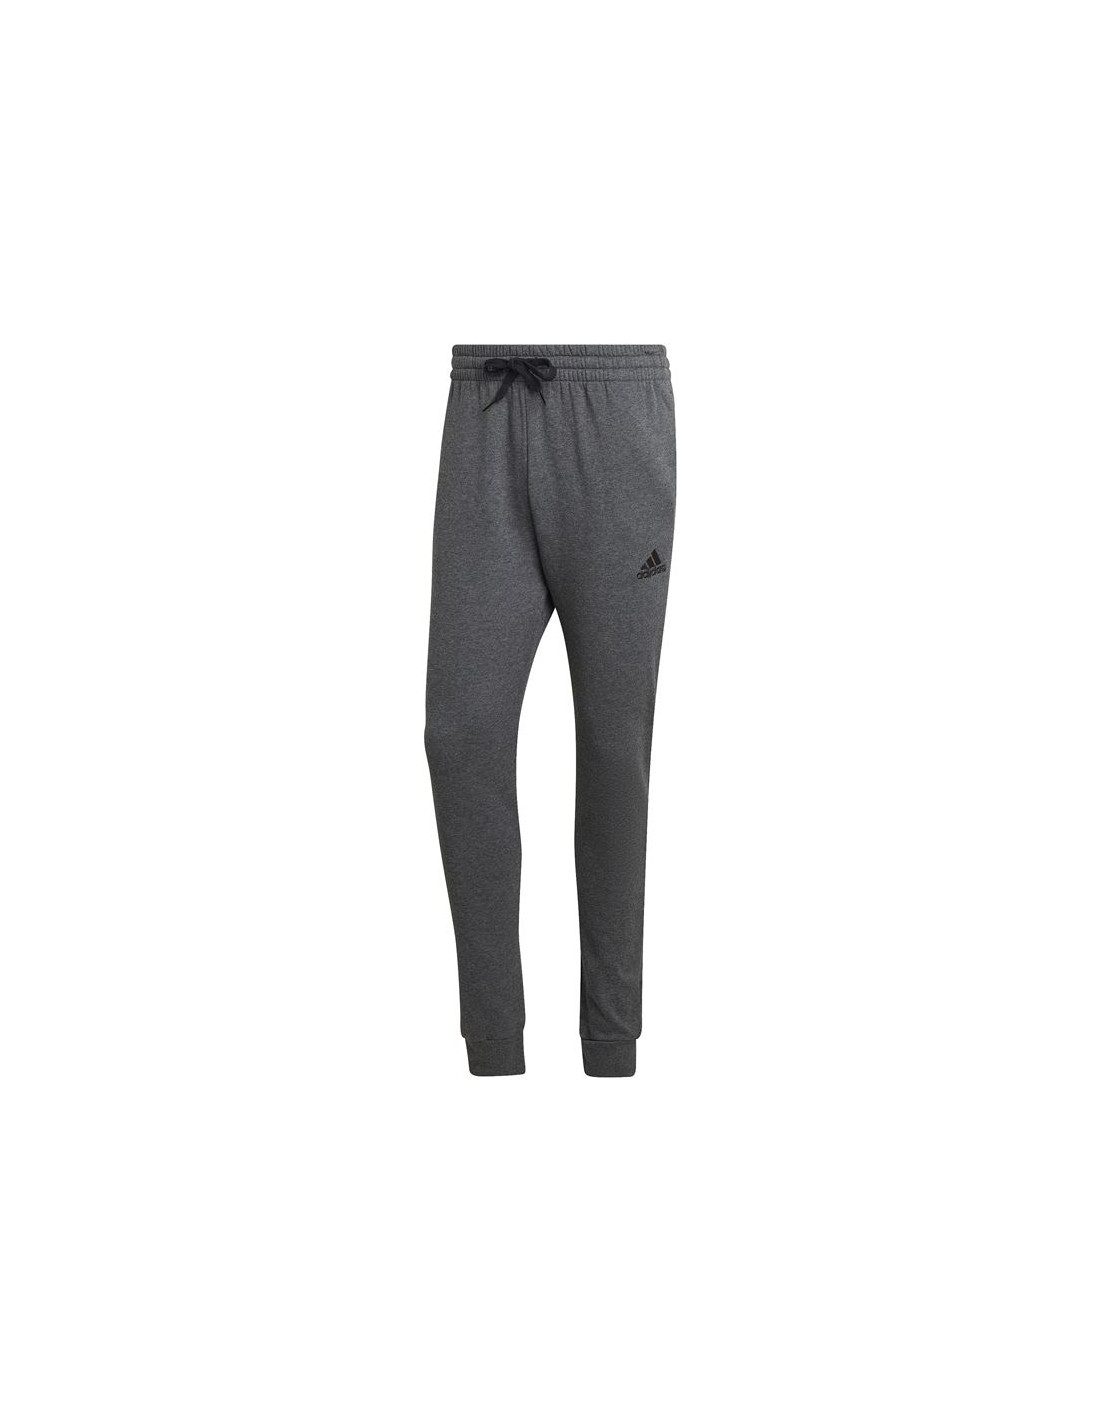 Pantalones adidas essentials regular tapered hombre grey